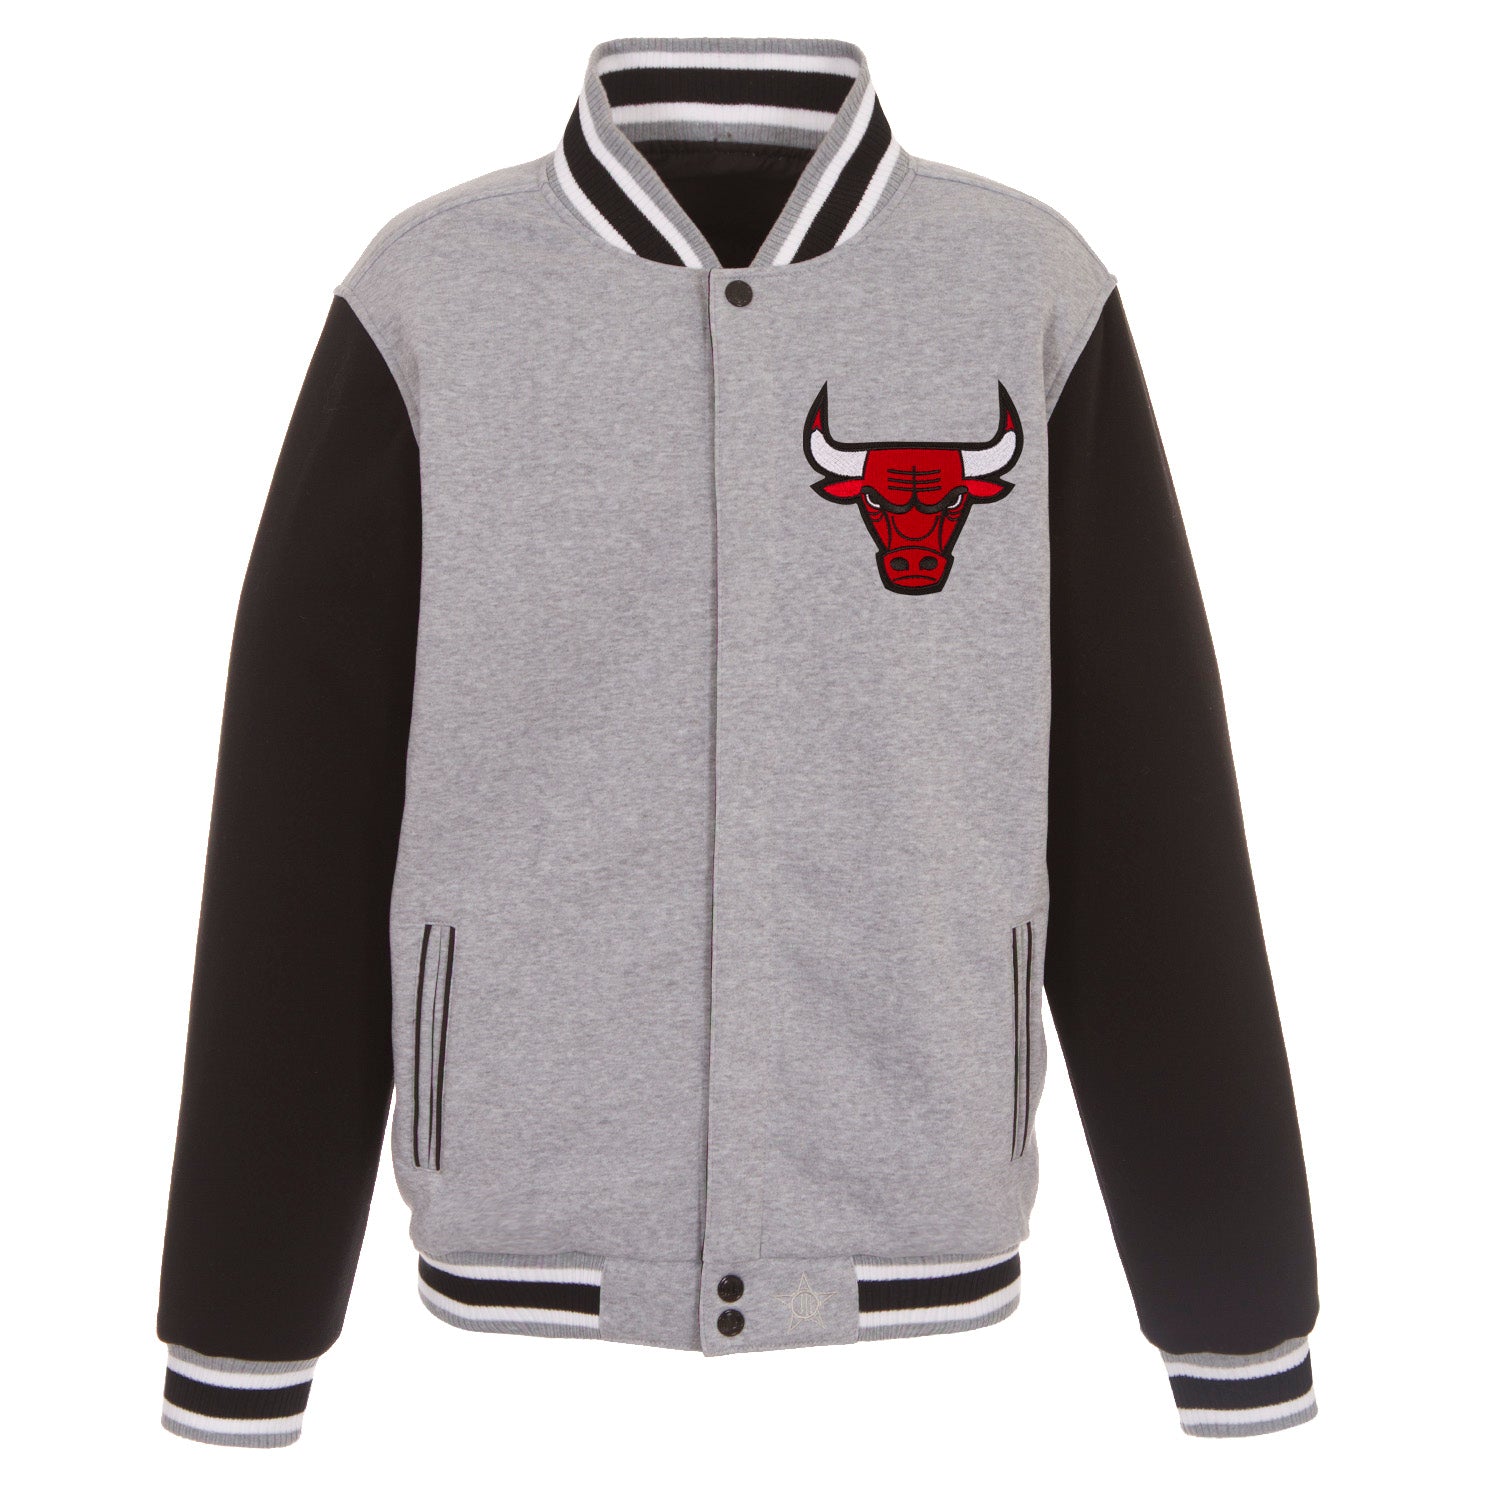 Chicago Bulls Two-Tone Reversible Fleece Jacket - Gray/Black